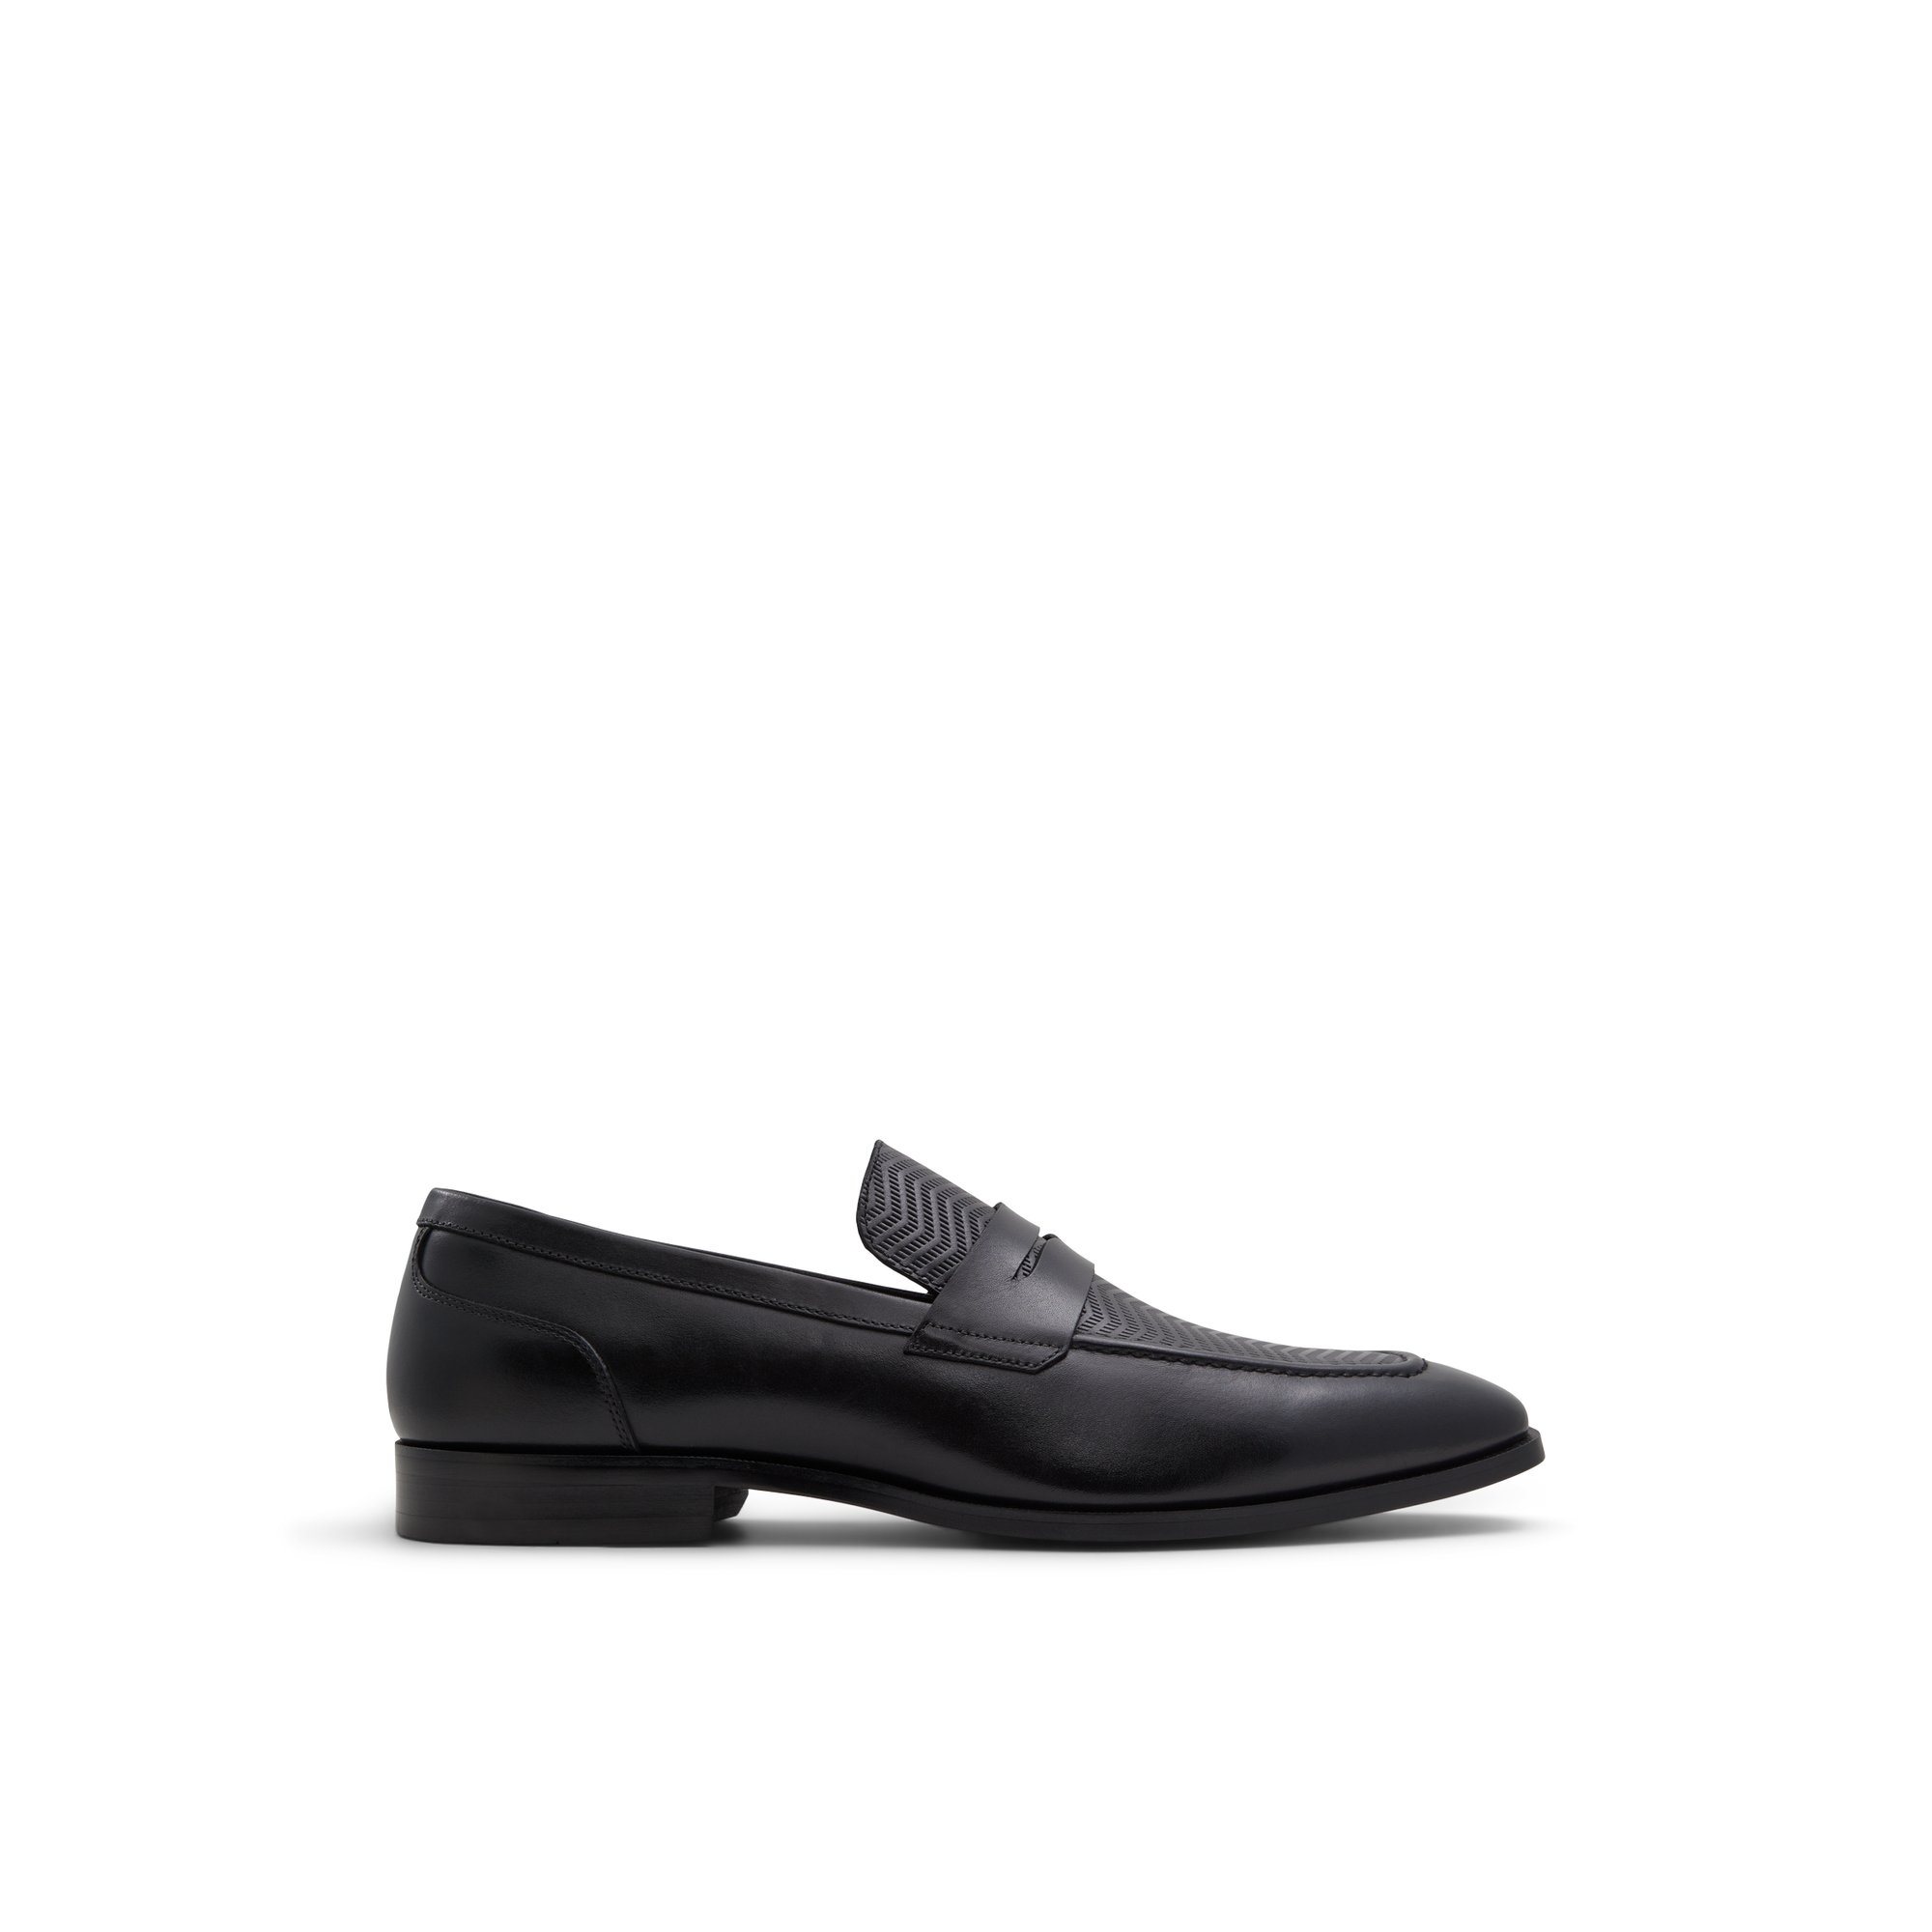 ALDO Aalto - Men's Dress Shoes - Black